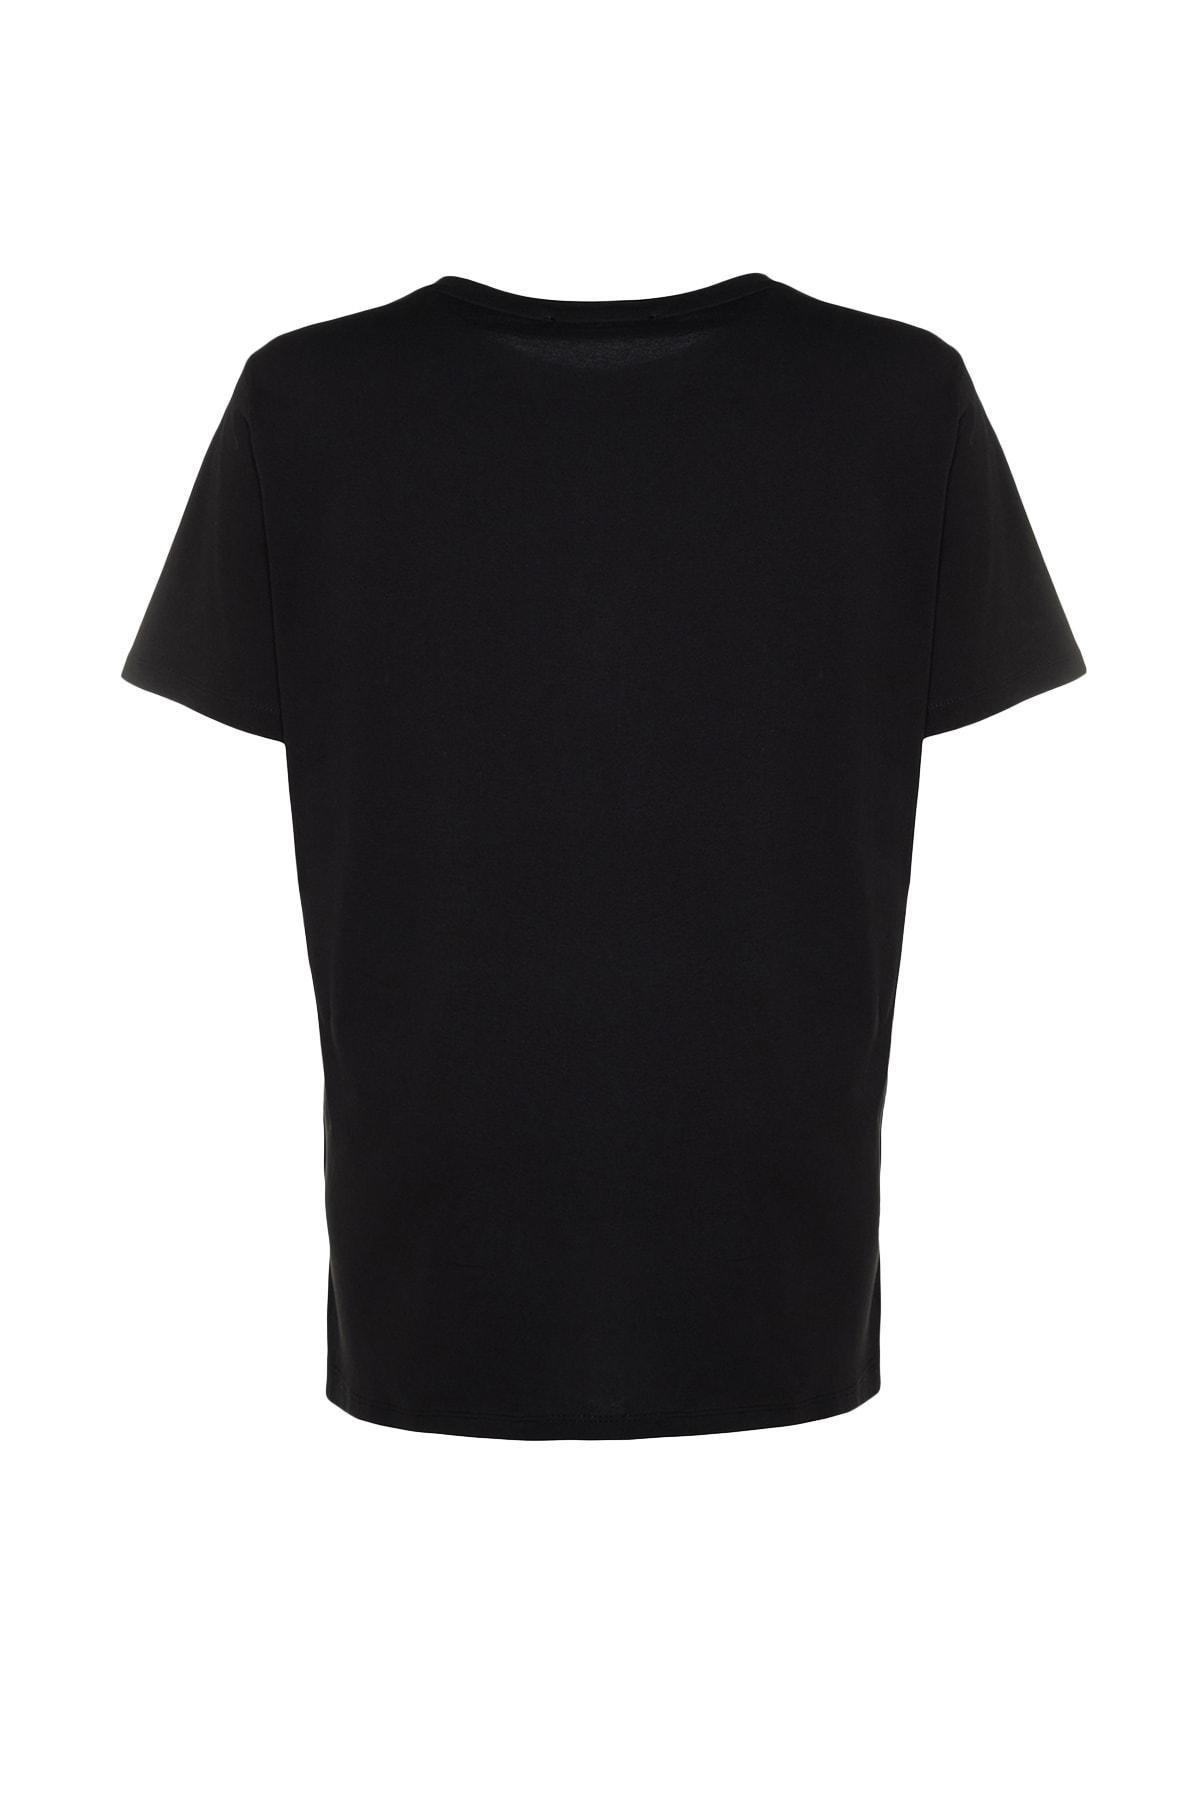 Trendyol - Black Graphic Plus Size T-Shirt